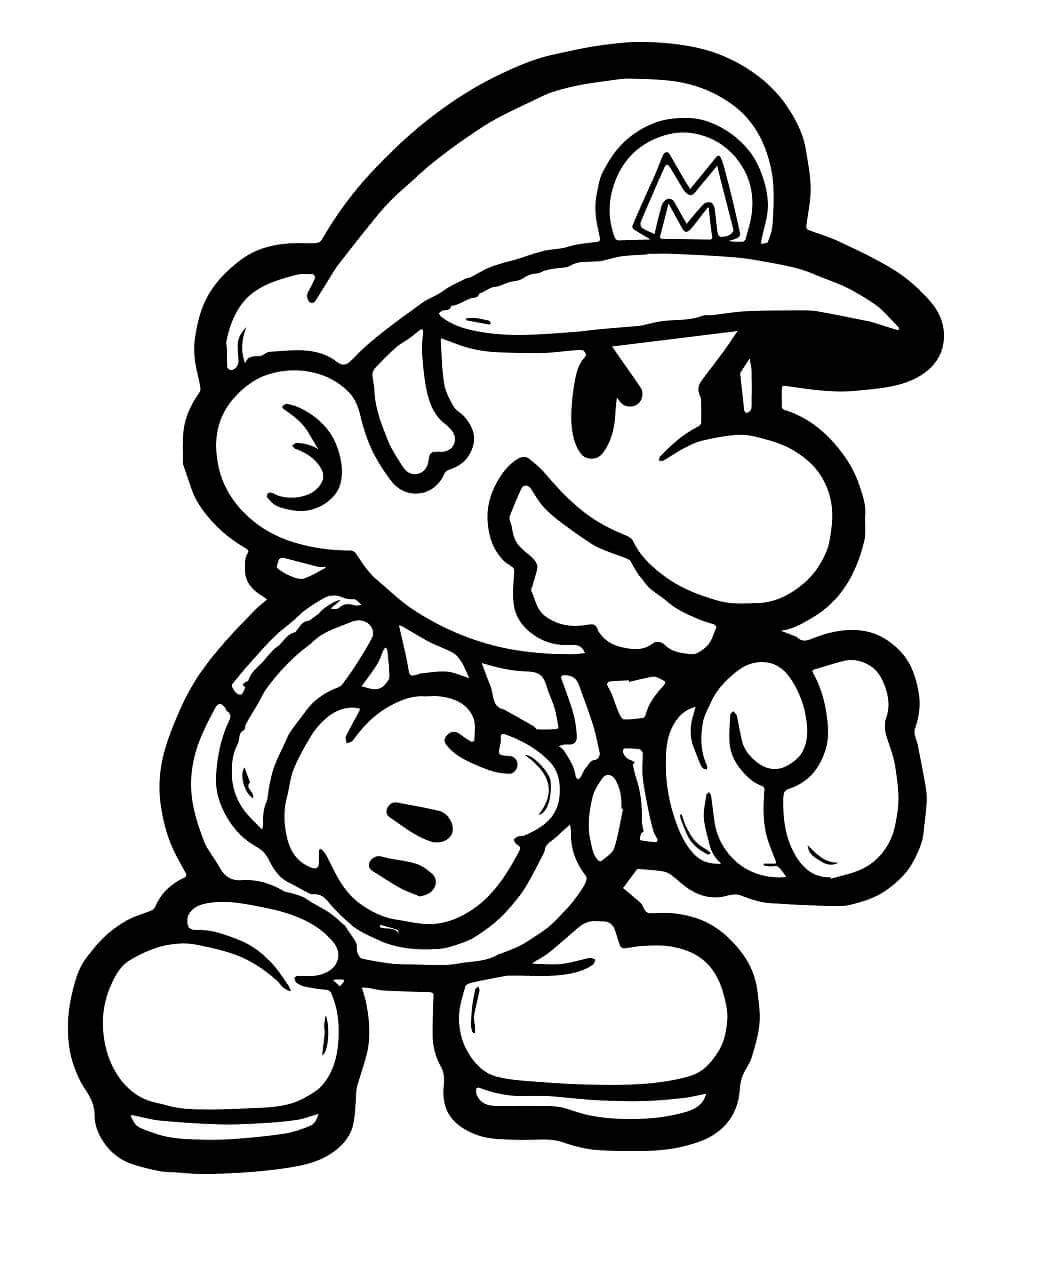 Mario Kickboks Tegninger til Farvelægning